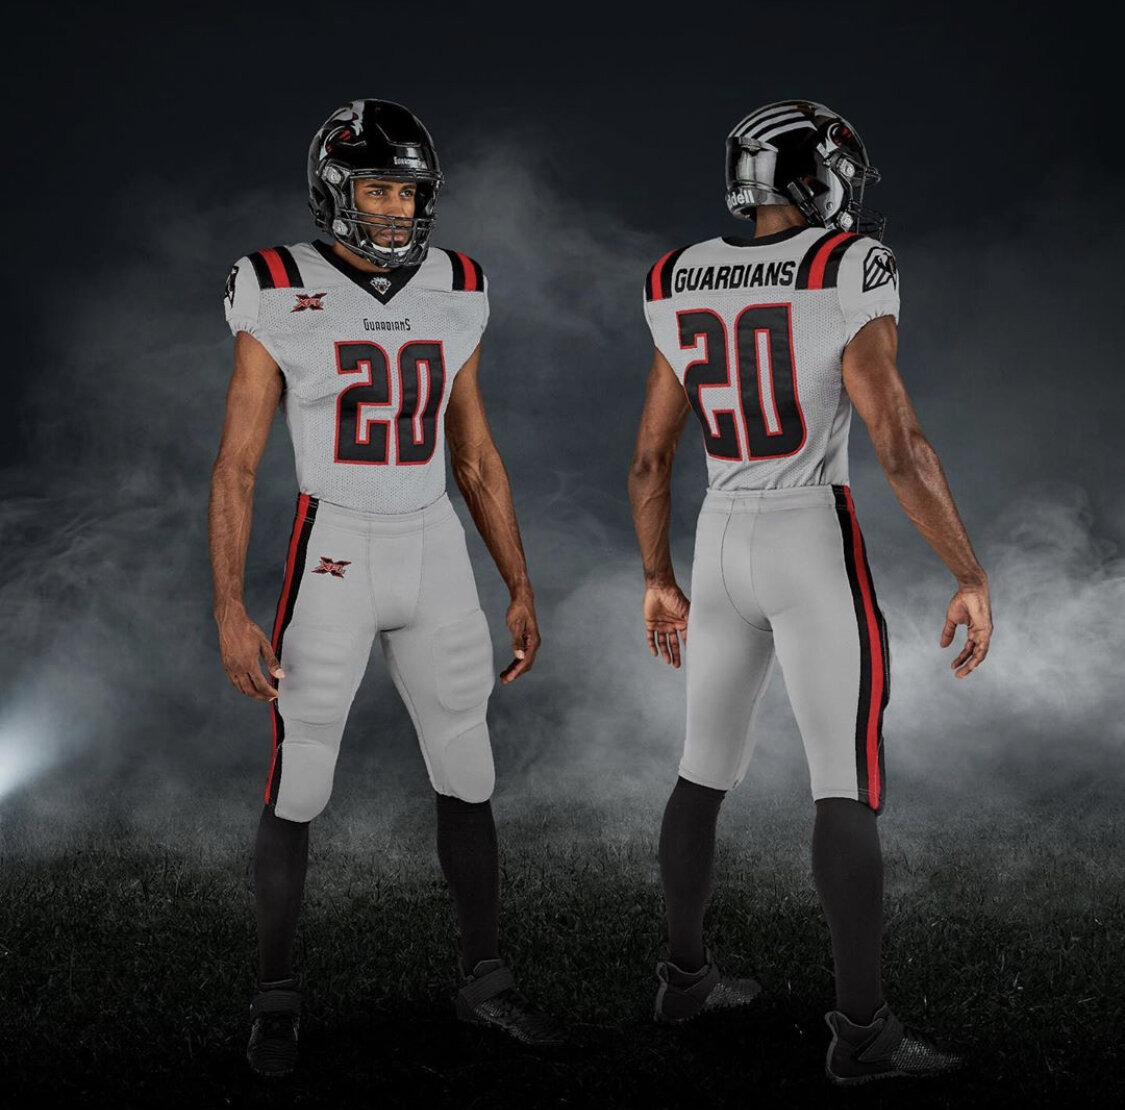 XFL's Seattle Dragons unveil flashy new uniforms (PHOTOS)